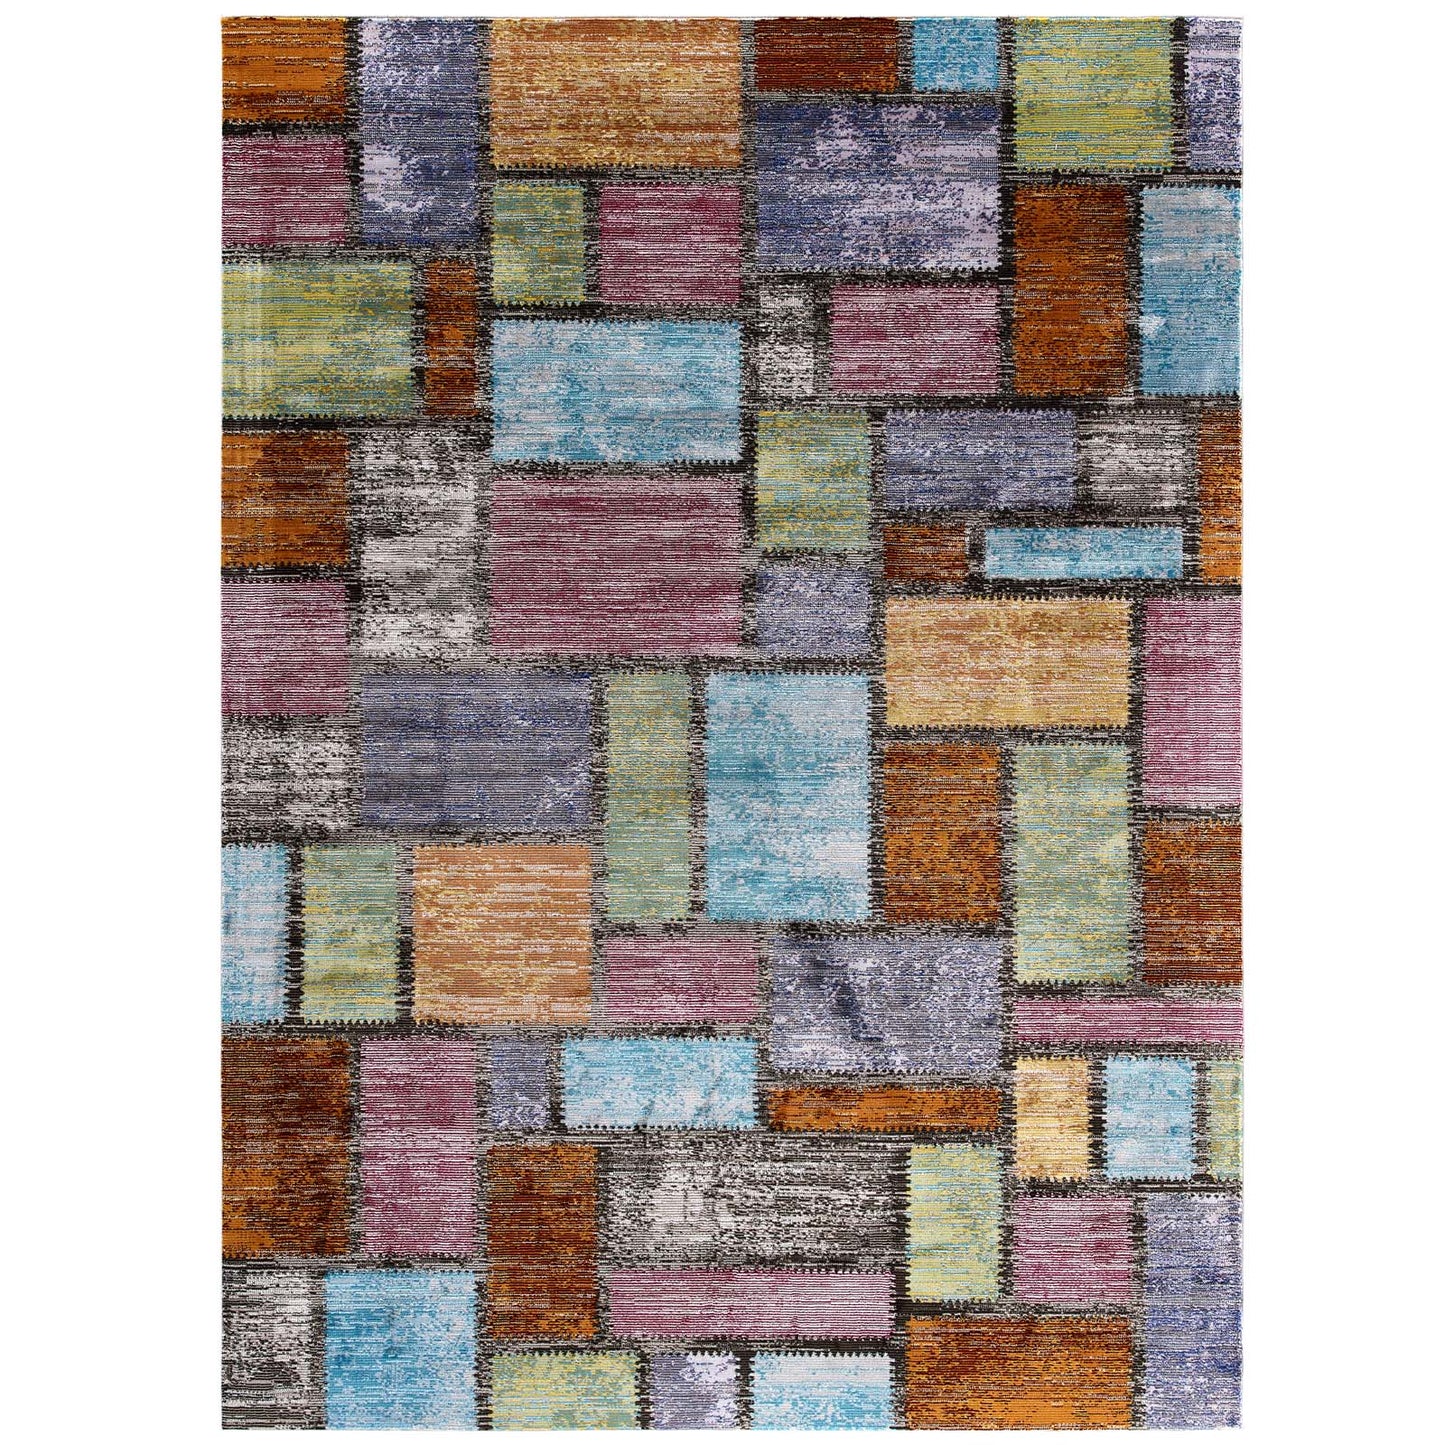 Success Nyssa Abstract Geometric Mosaic 4x6 Area Rug Multicolored R-1162A-46